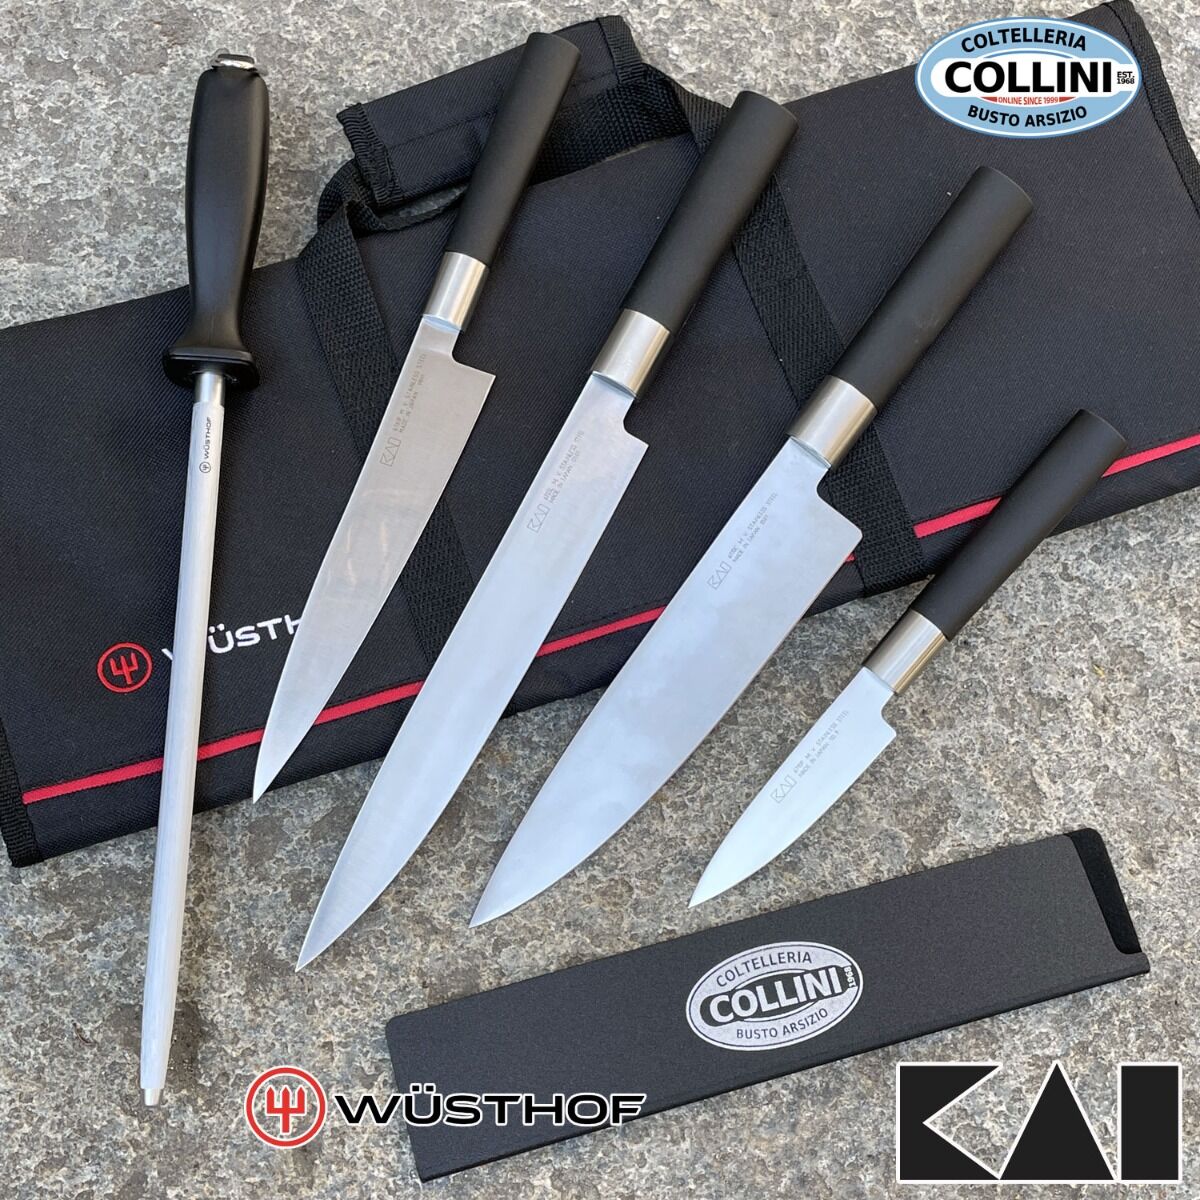 Coltelleria Collini - Set of 4 professional kitchen knives Kai